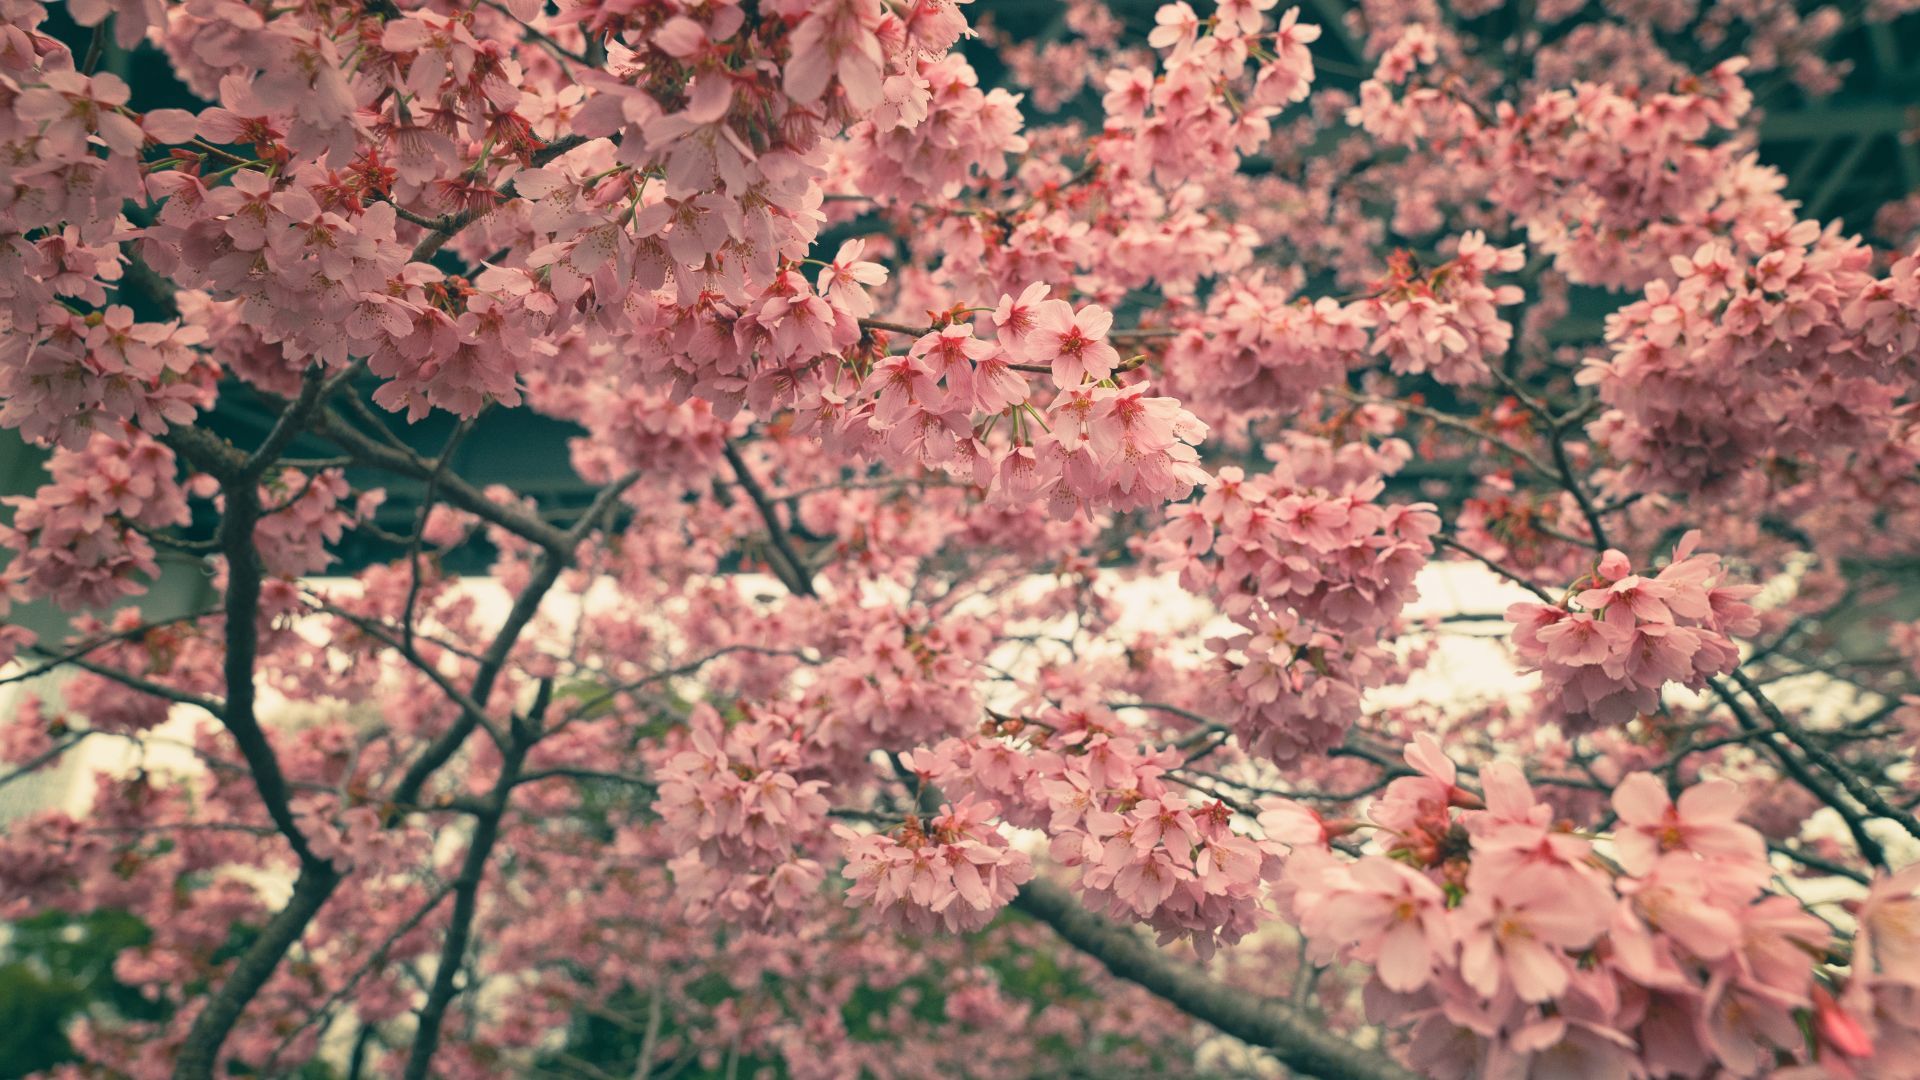 P3279201 | Cherry blossom japan, Nature photography, Japan cherry blossom